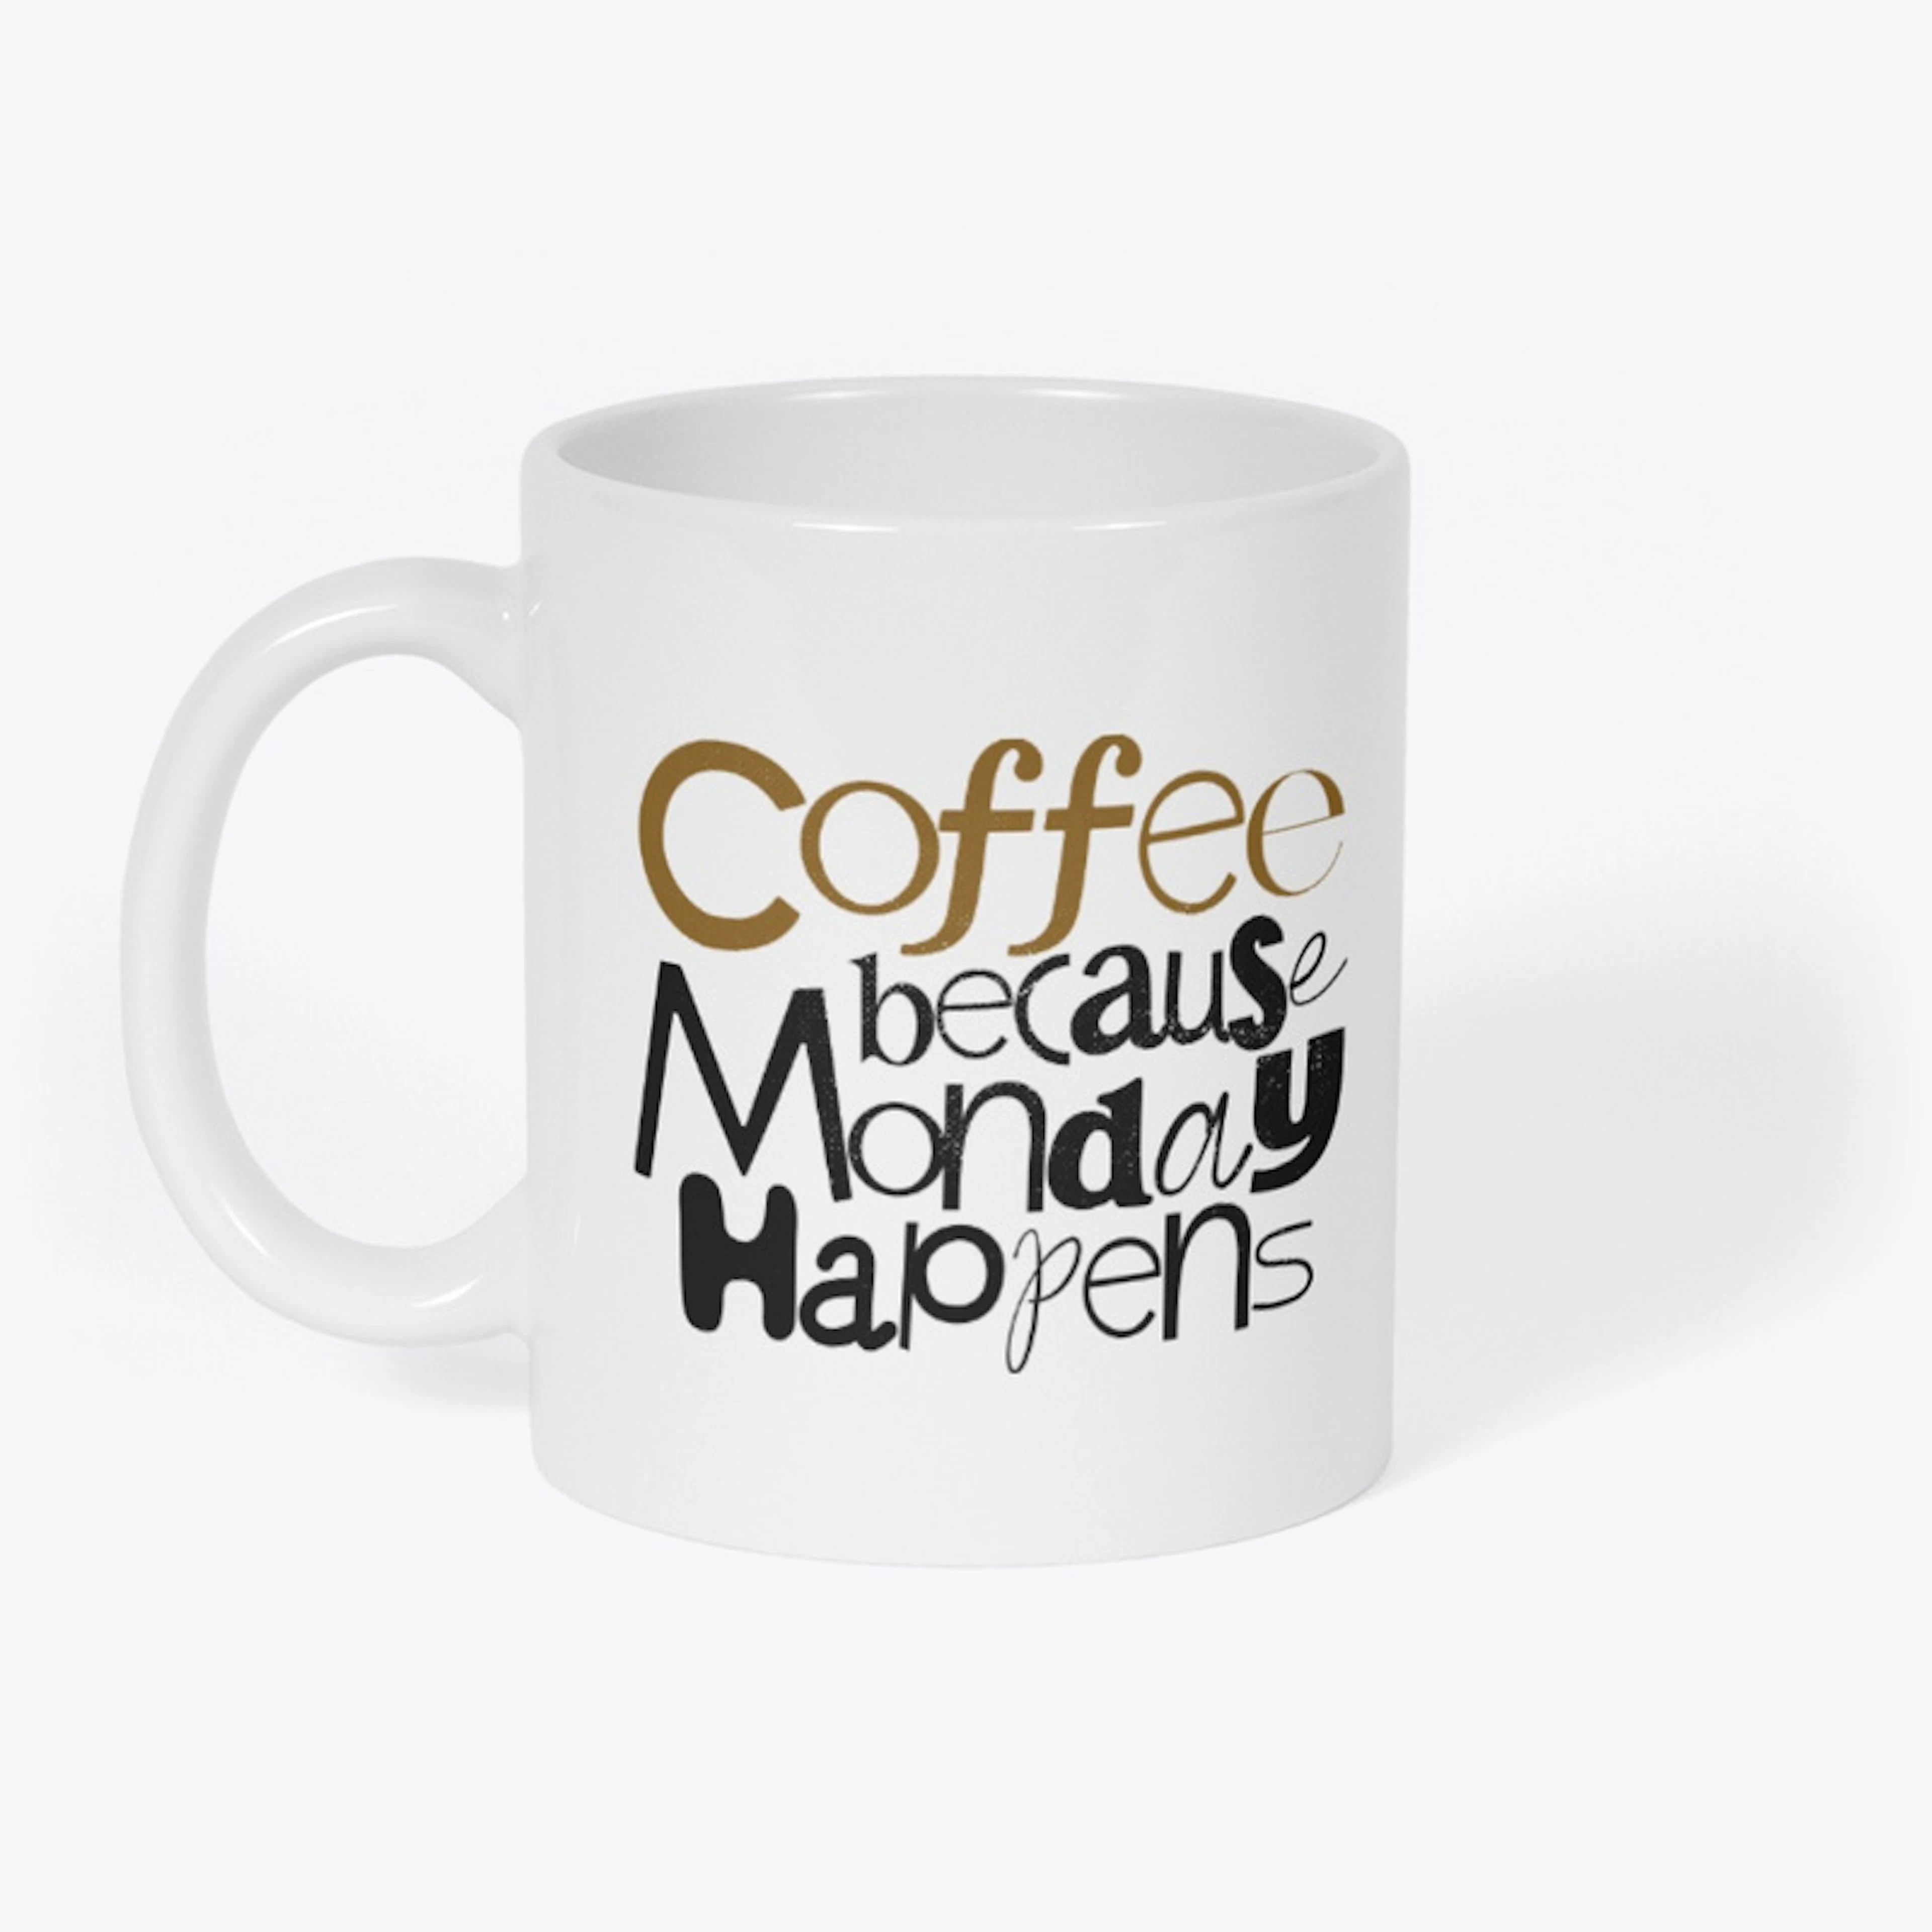 Coffee because monday happens designs